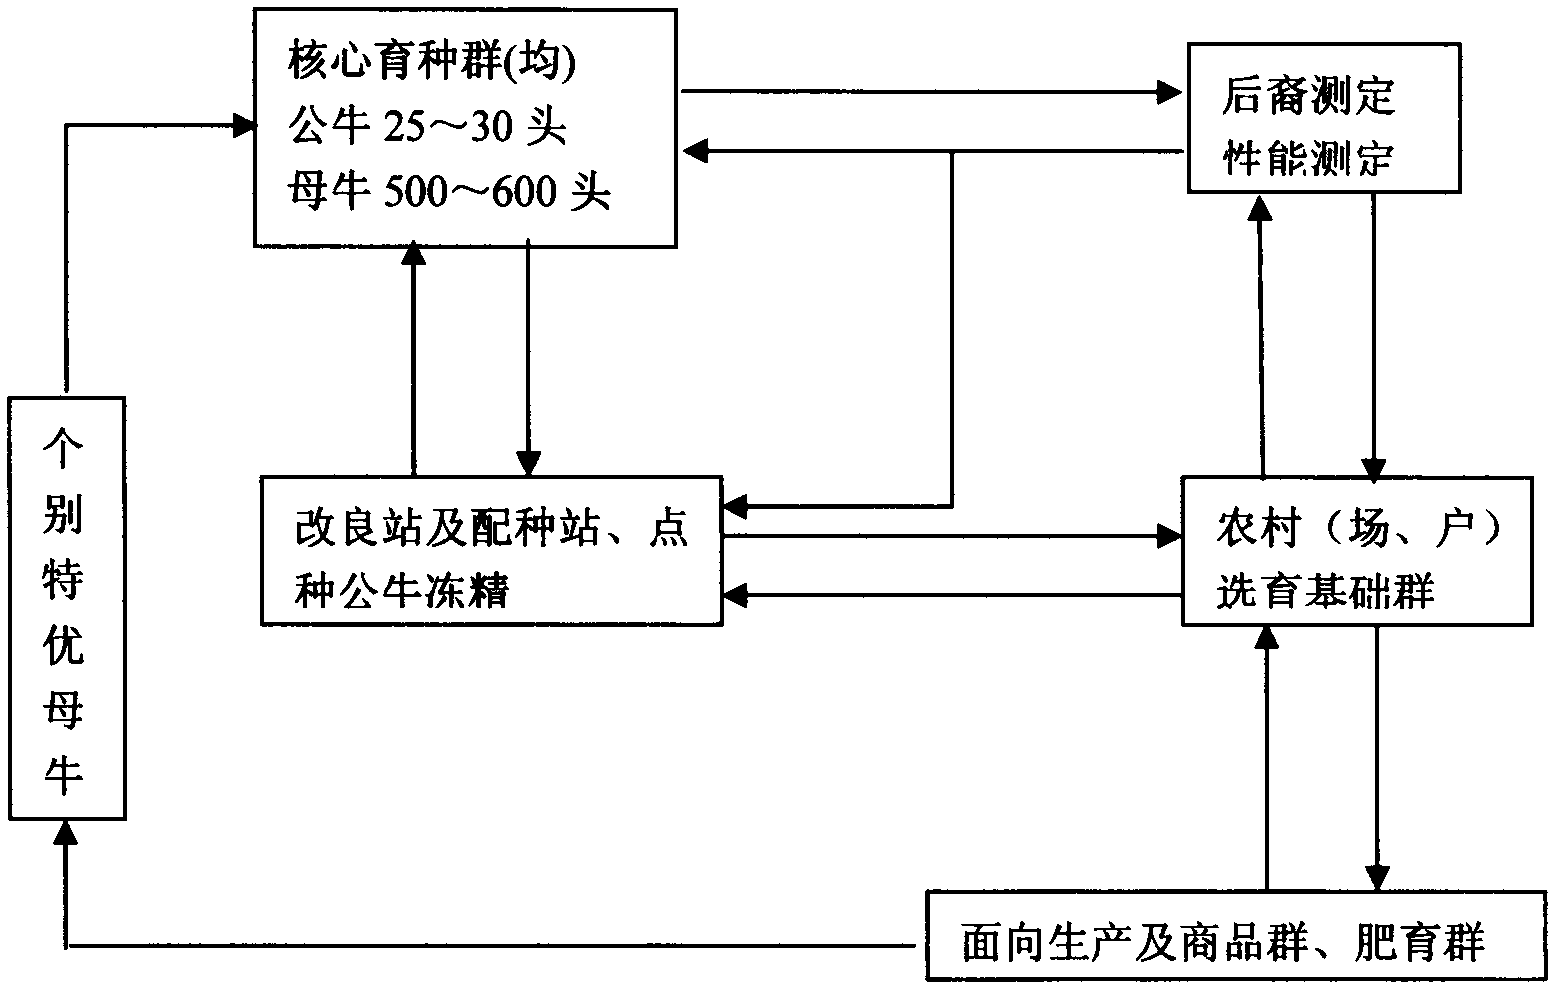 Standardized production method of Xizhen cattle